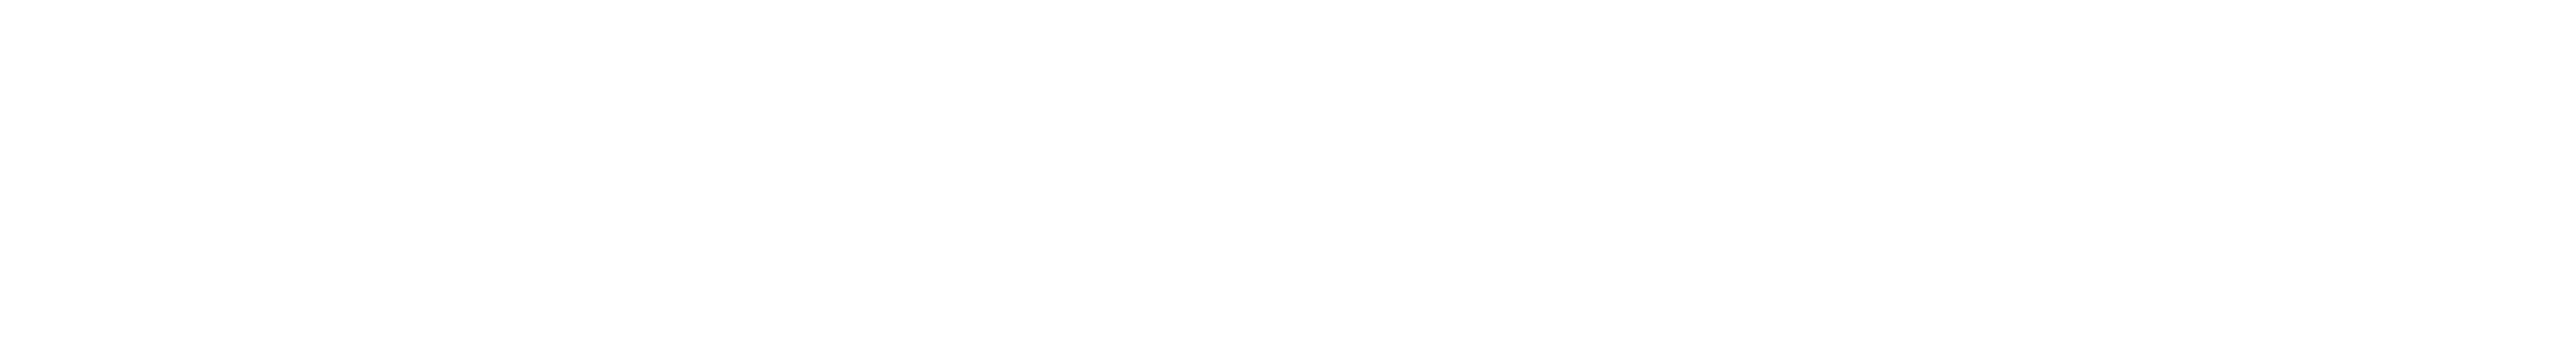 Zuzani (White)